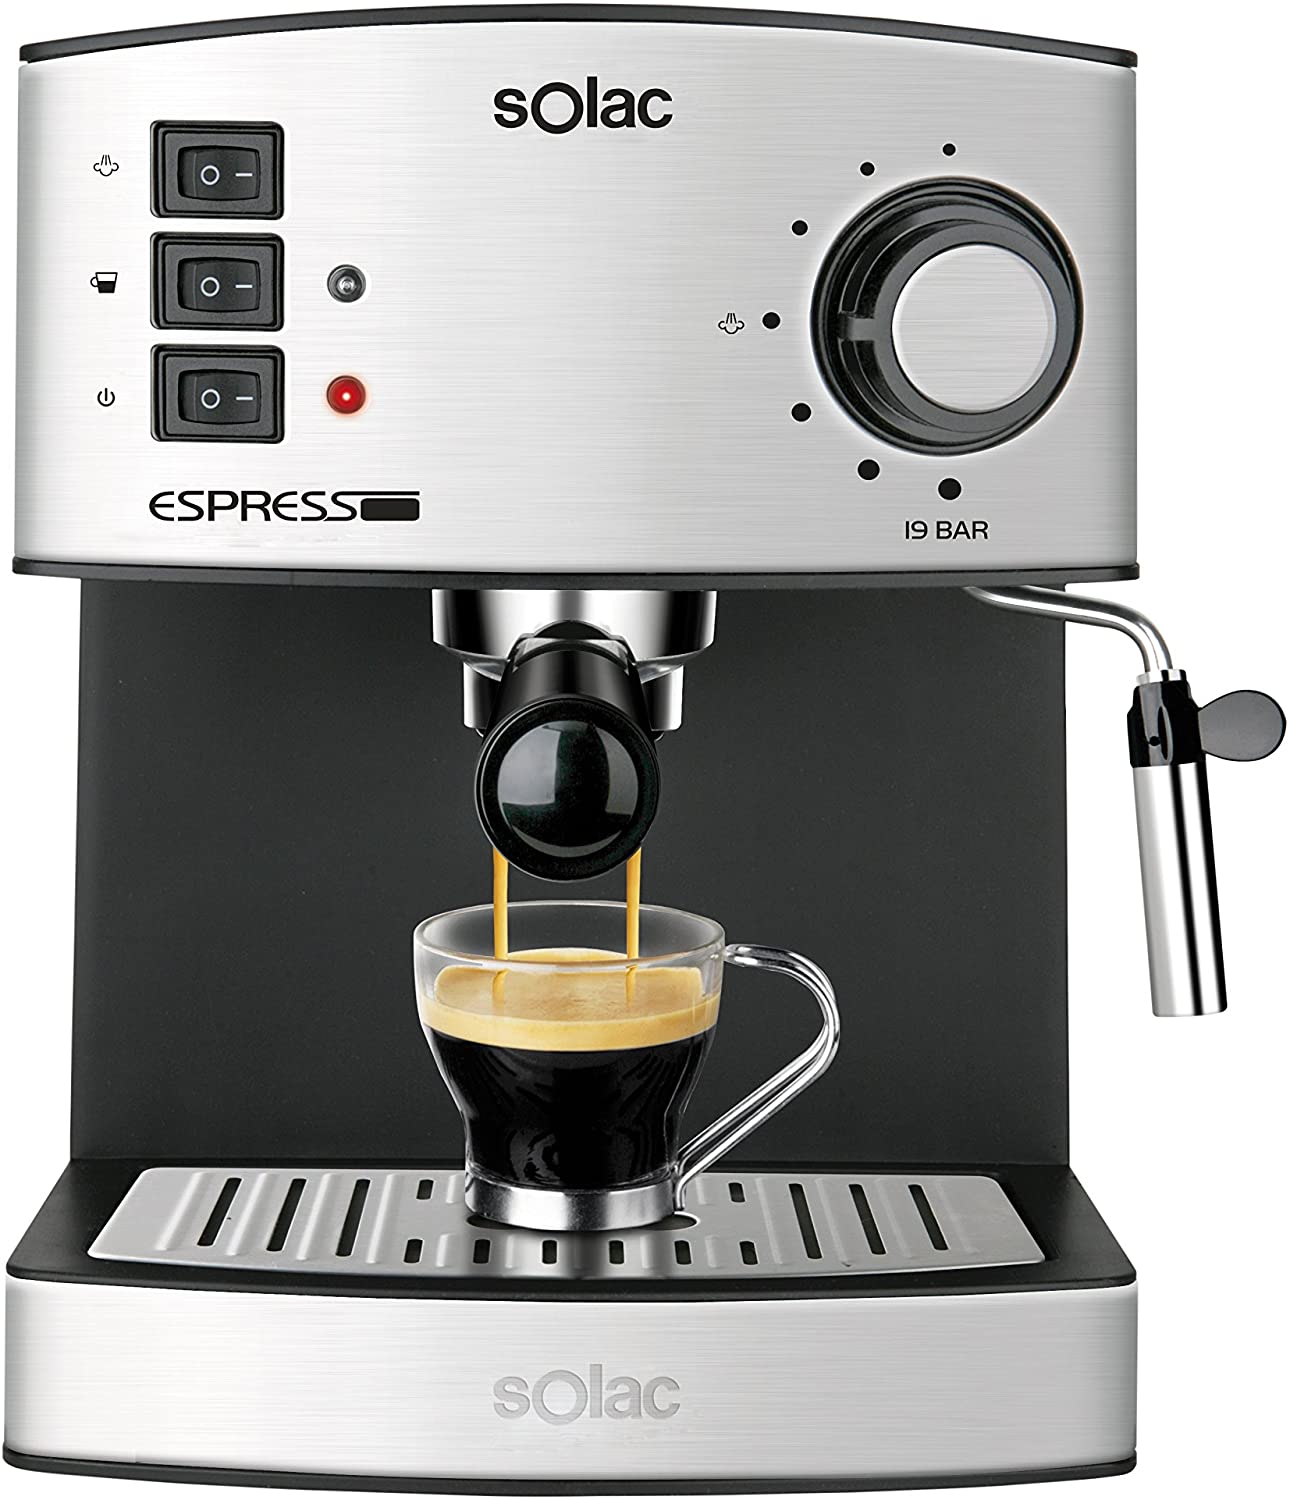 CE-4480 / Solac Eesspresso machine silver 850 watt 19 bar / self automation coffe  / 1.6L / Adjustab 1.6 L / silver